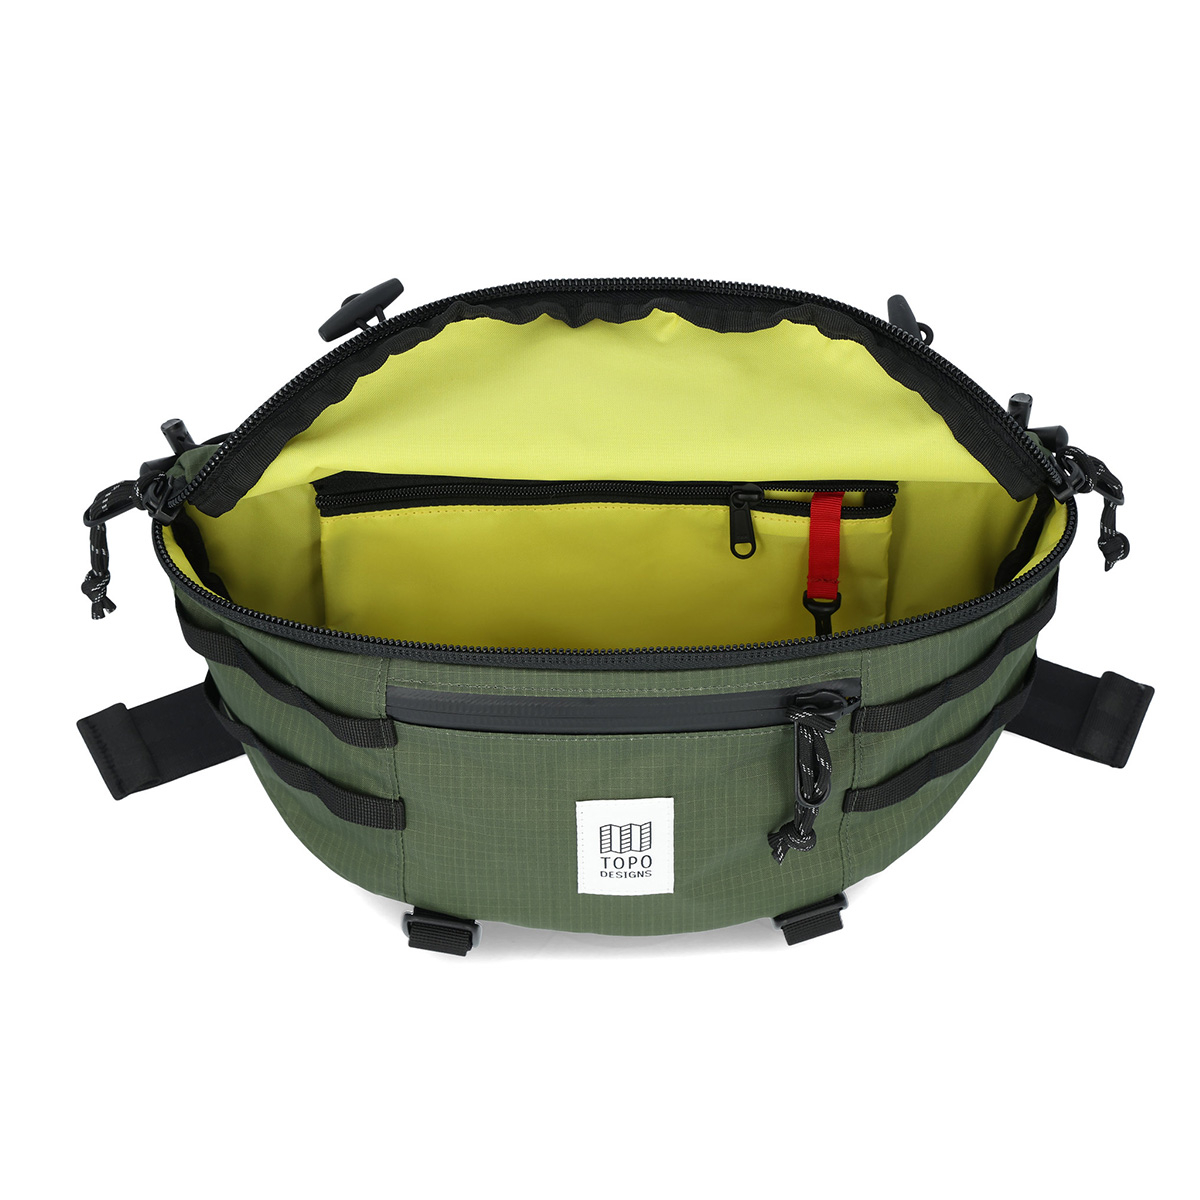 Topo Designs Mountain Sling Bag, spacious main compartment, smaller organizational pockets, bright interior lining